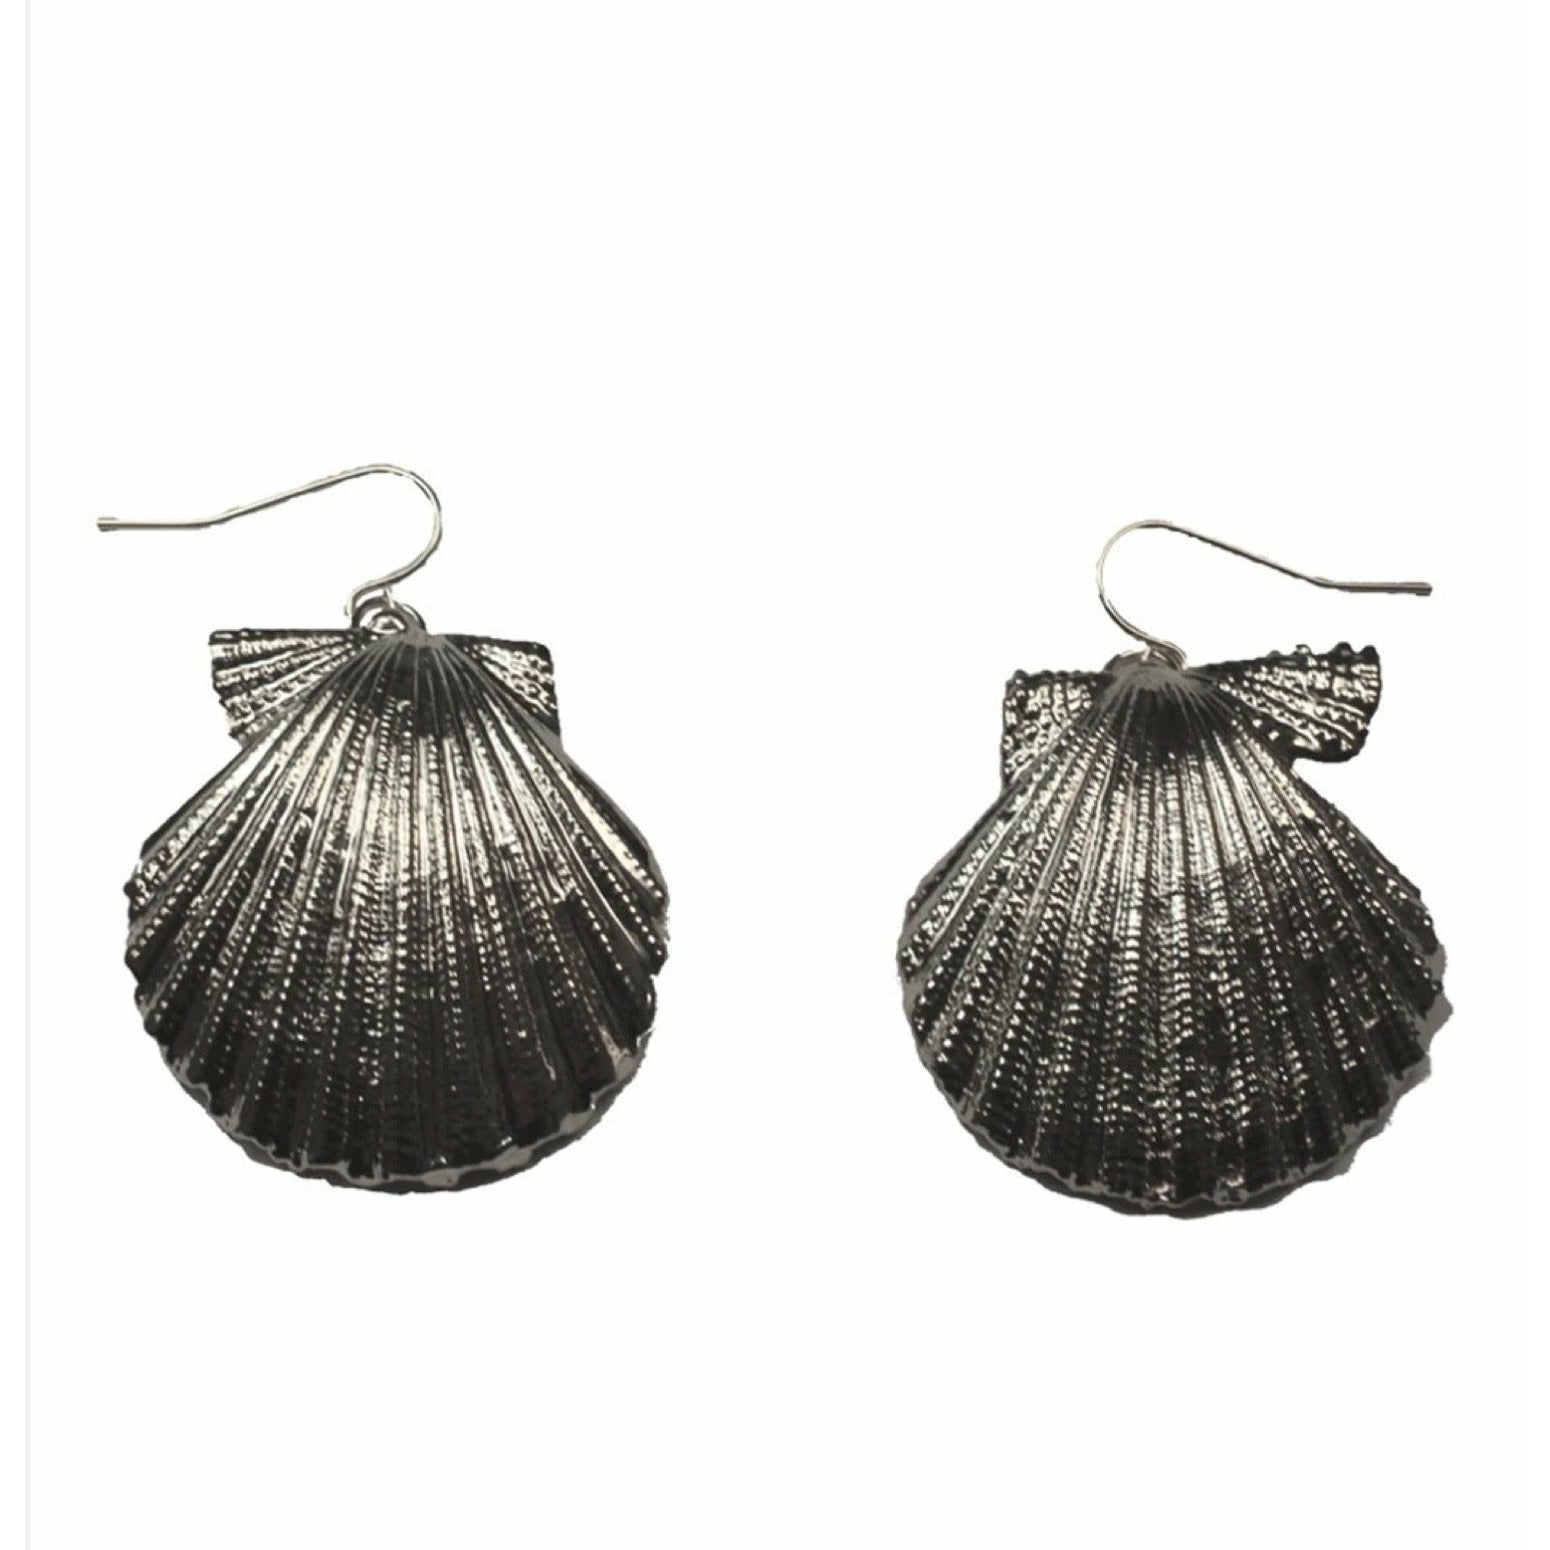 Seashell Earrings - Silver